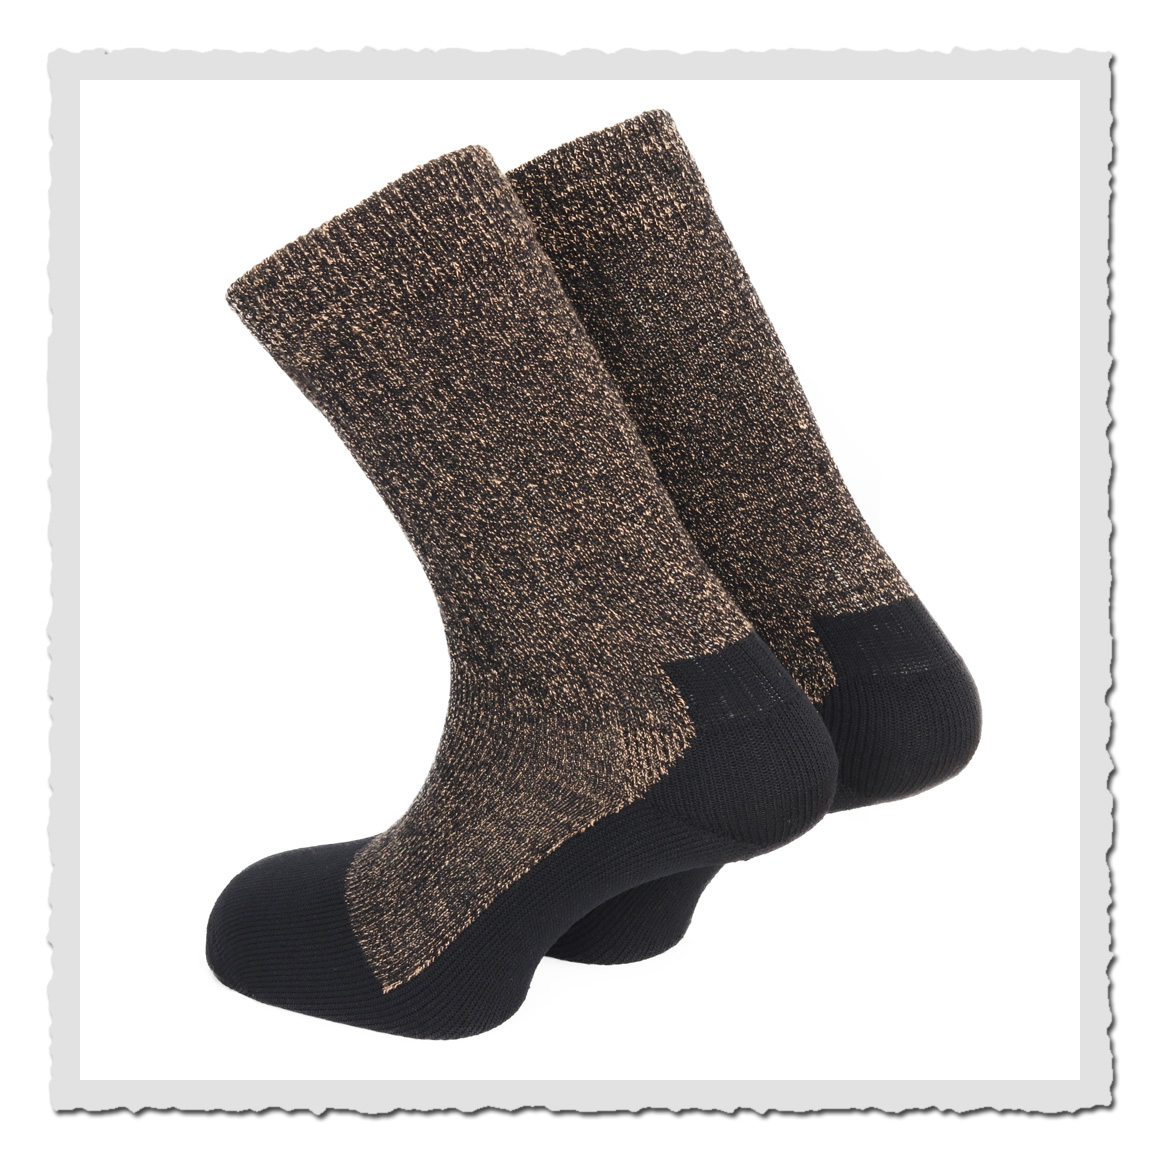 Deep Toe Capped Wool Sock black 97642